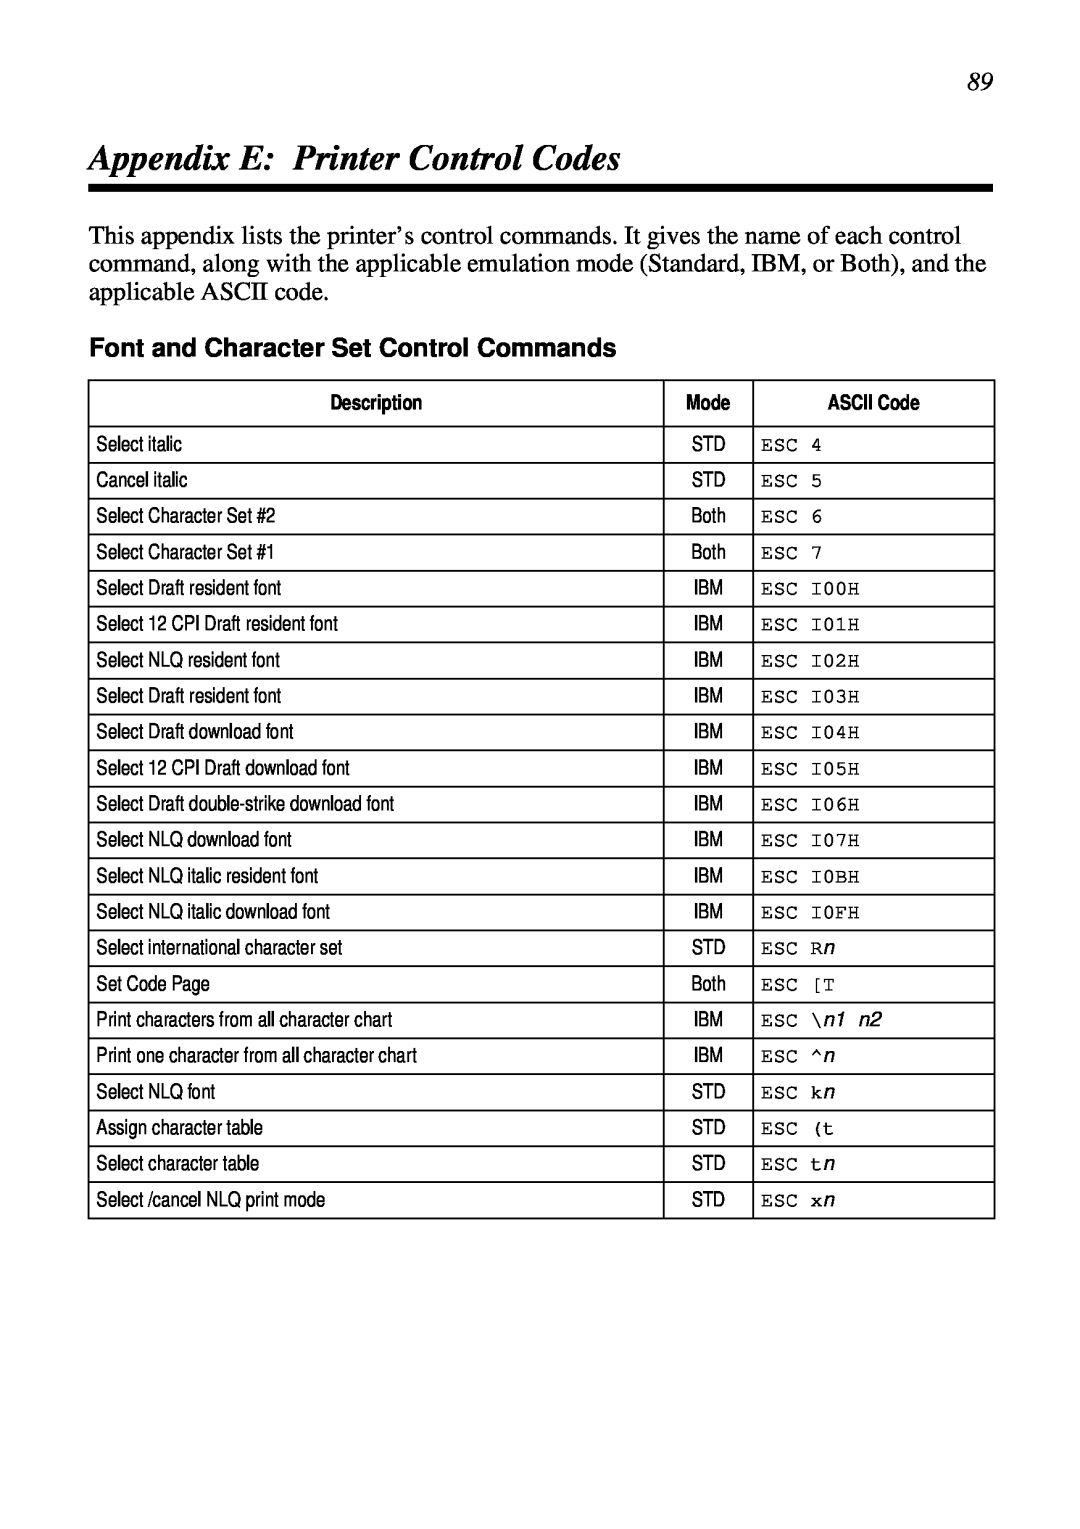 Star Micronics LC-7211 user manual Appendix E Printer Control Codes, Font and Character Set Control Commands 